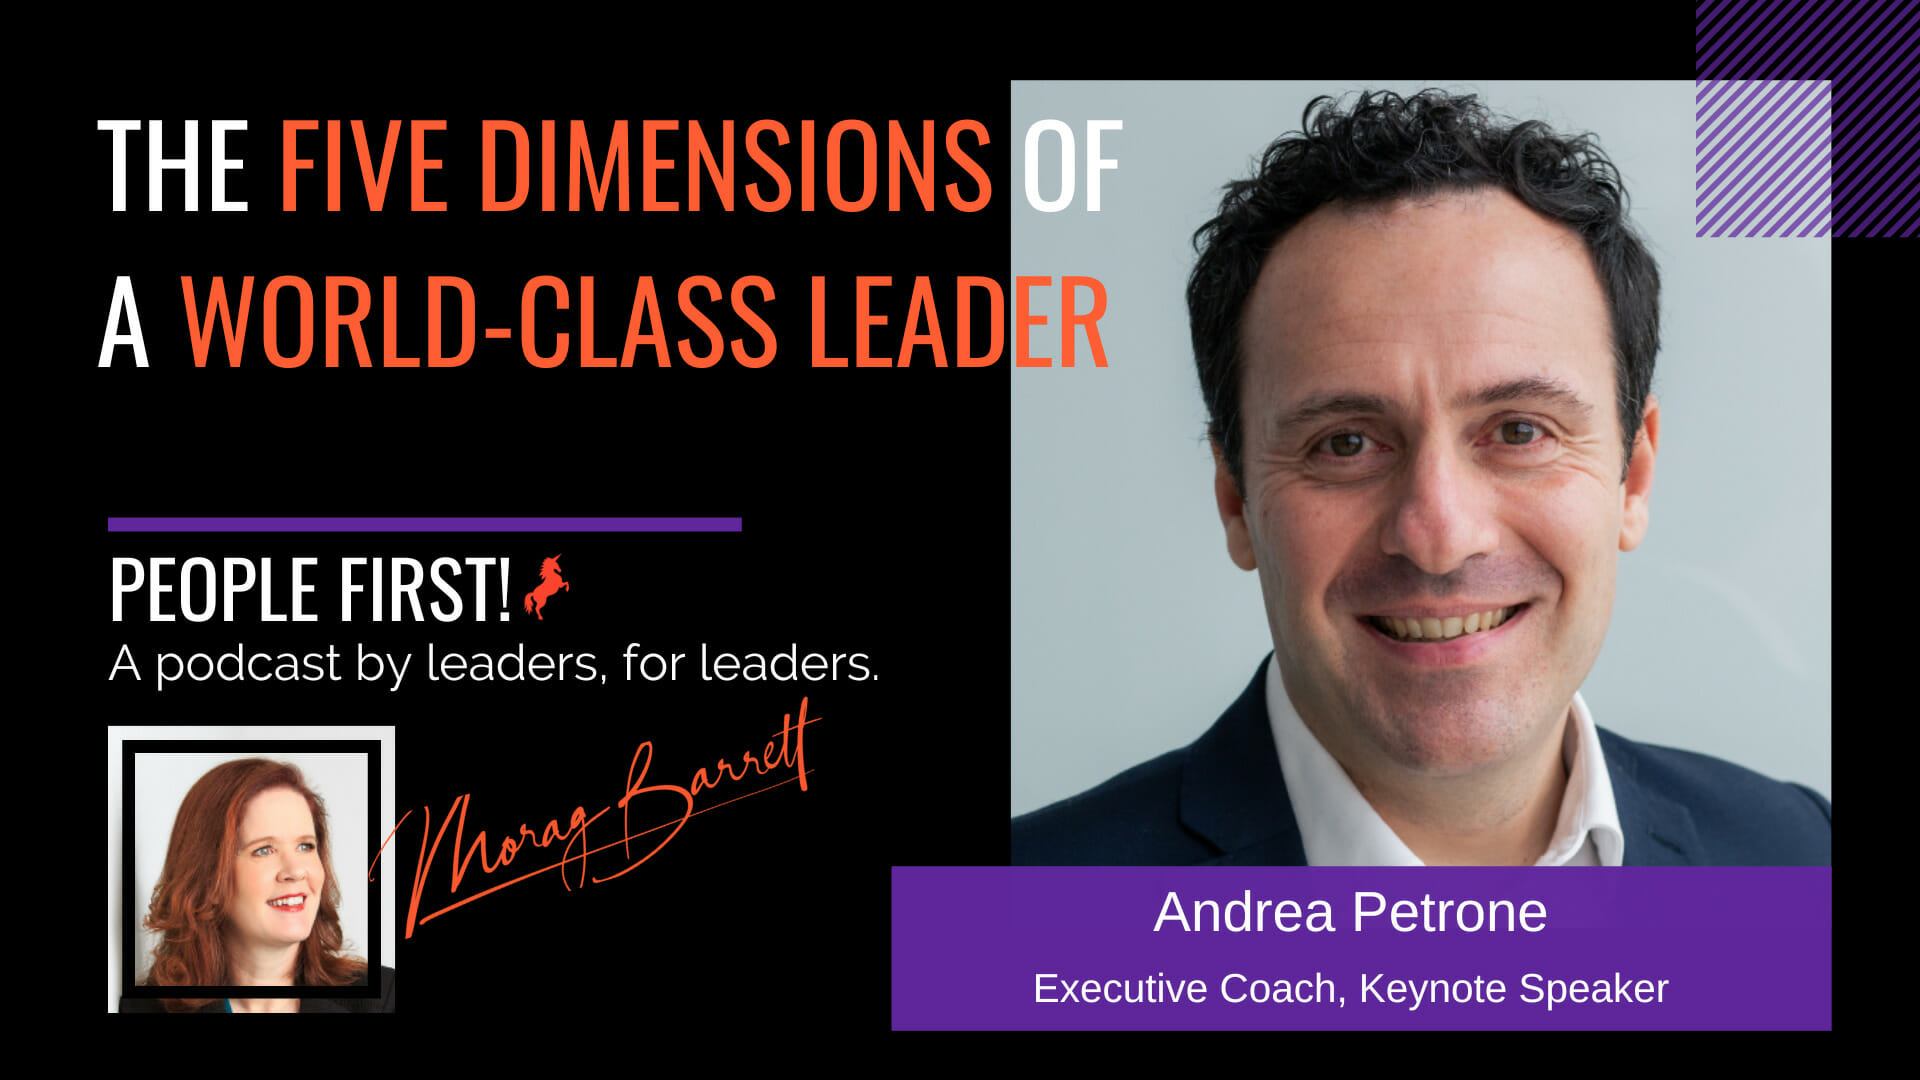 The Five Dimensions of a World-Class Leader Morag Barrett and Andrea Petrone, Executive Coach, Keynote Speaker